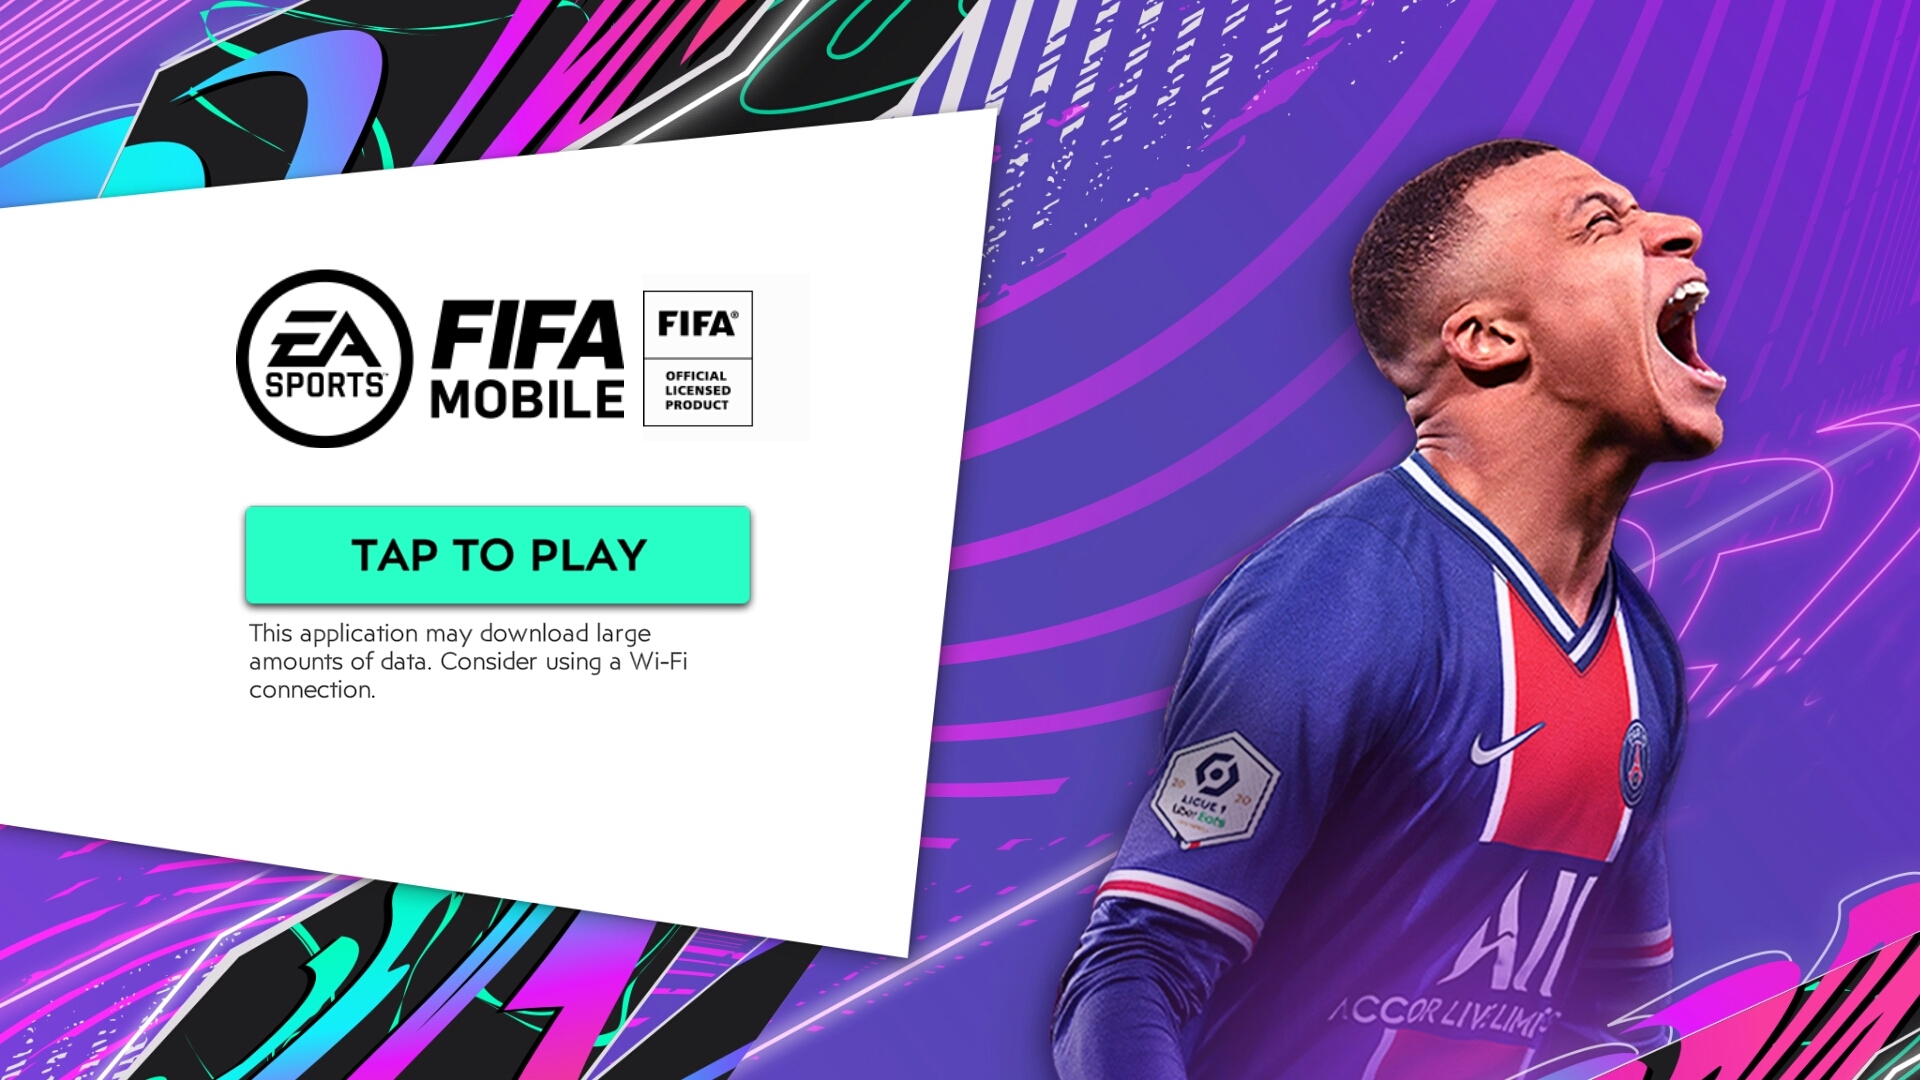 FIFA Mobile – Spring Showdown – FIFPlay